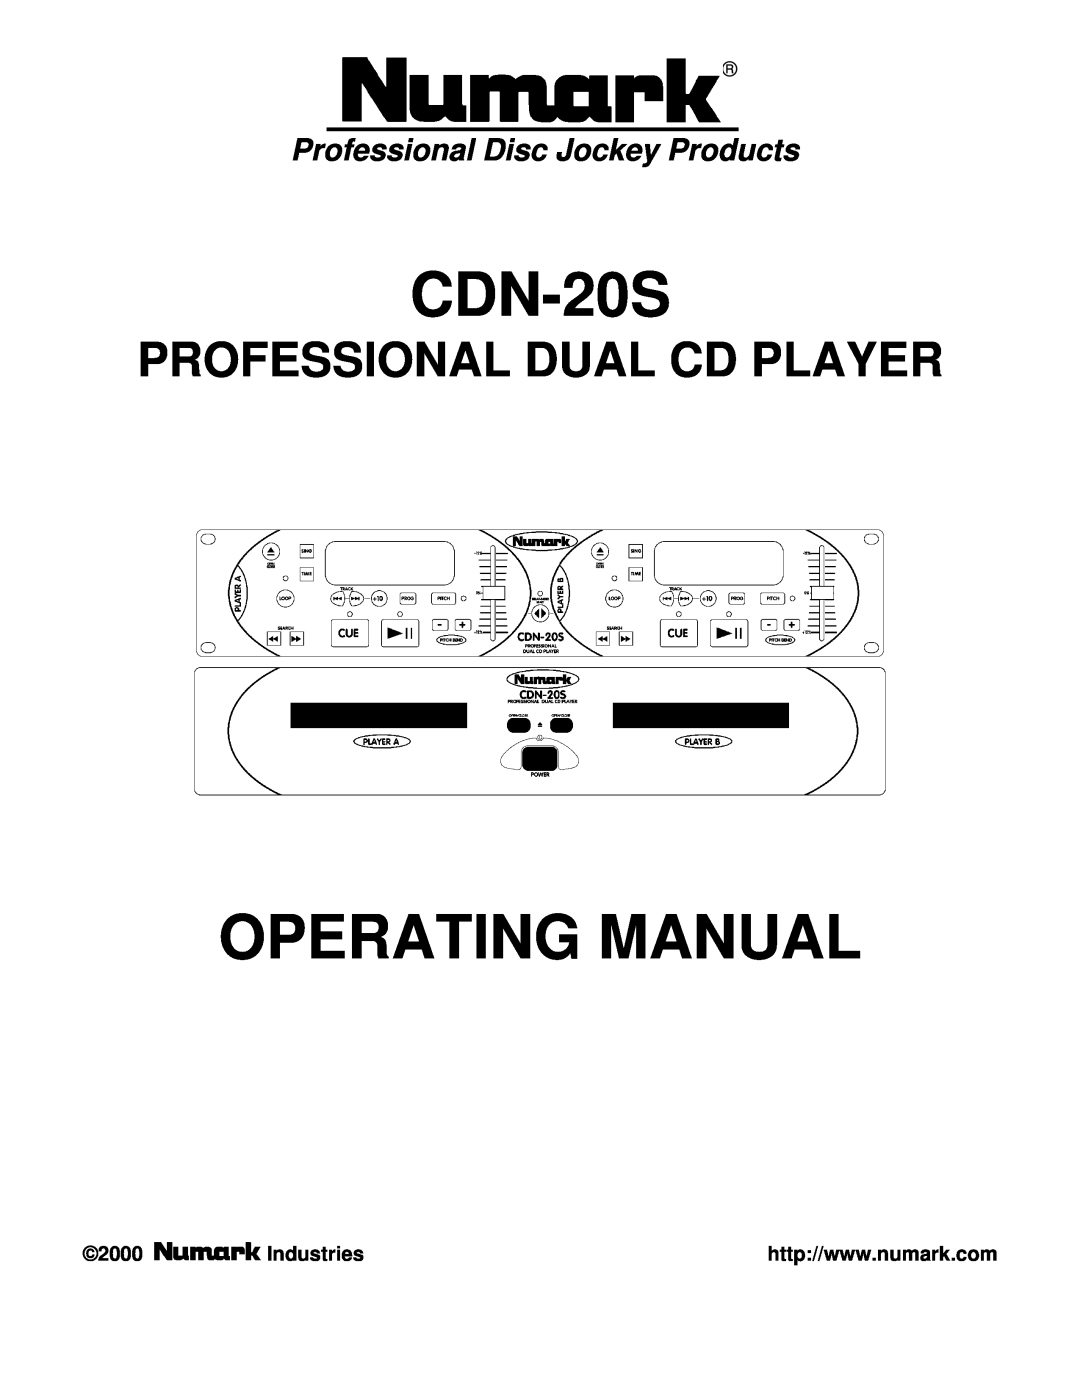 Numark Industries CDN-20S manual Professional Disc Jockey Products, Operating Manual, Professional Dual Cd Player 